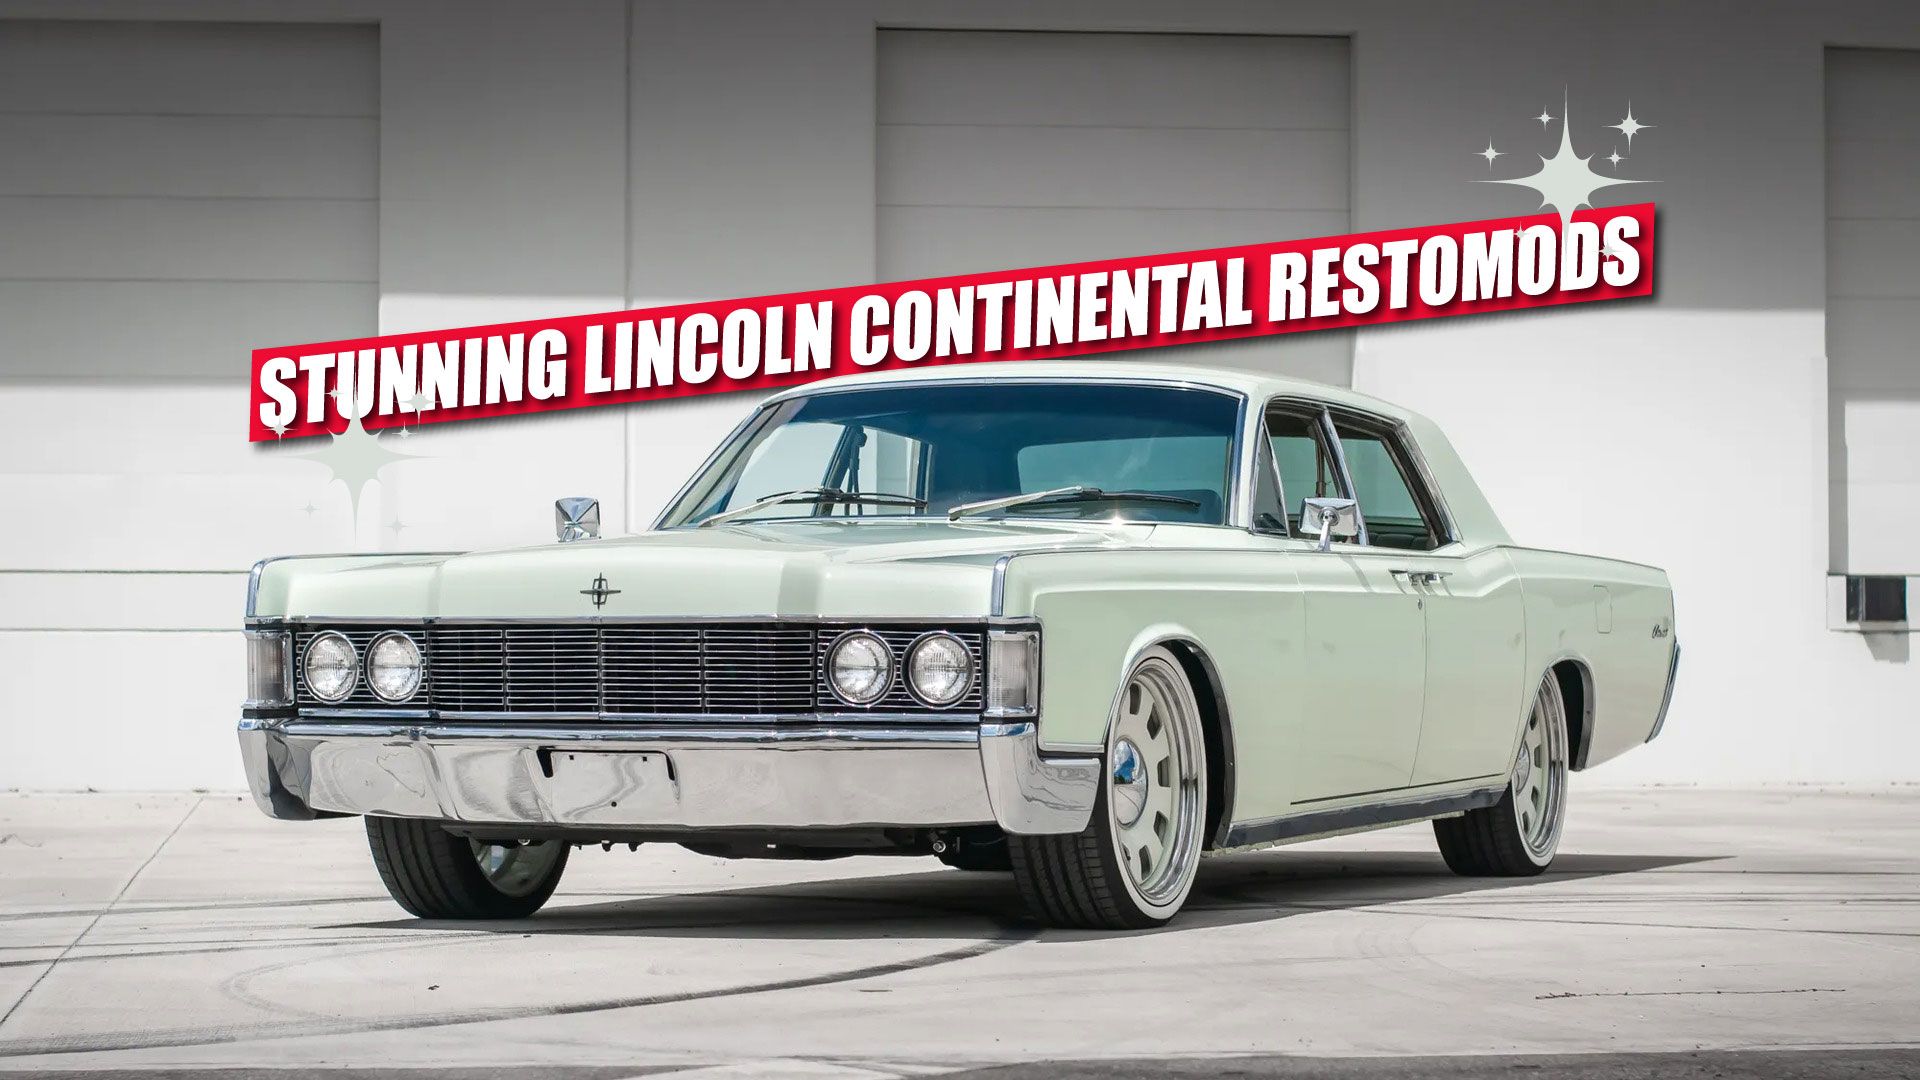 Lincoln COntinental restomod